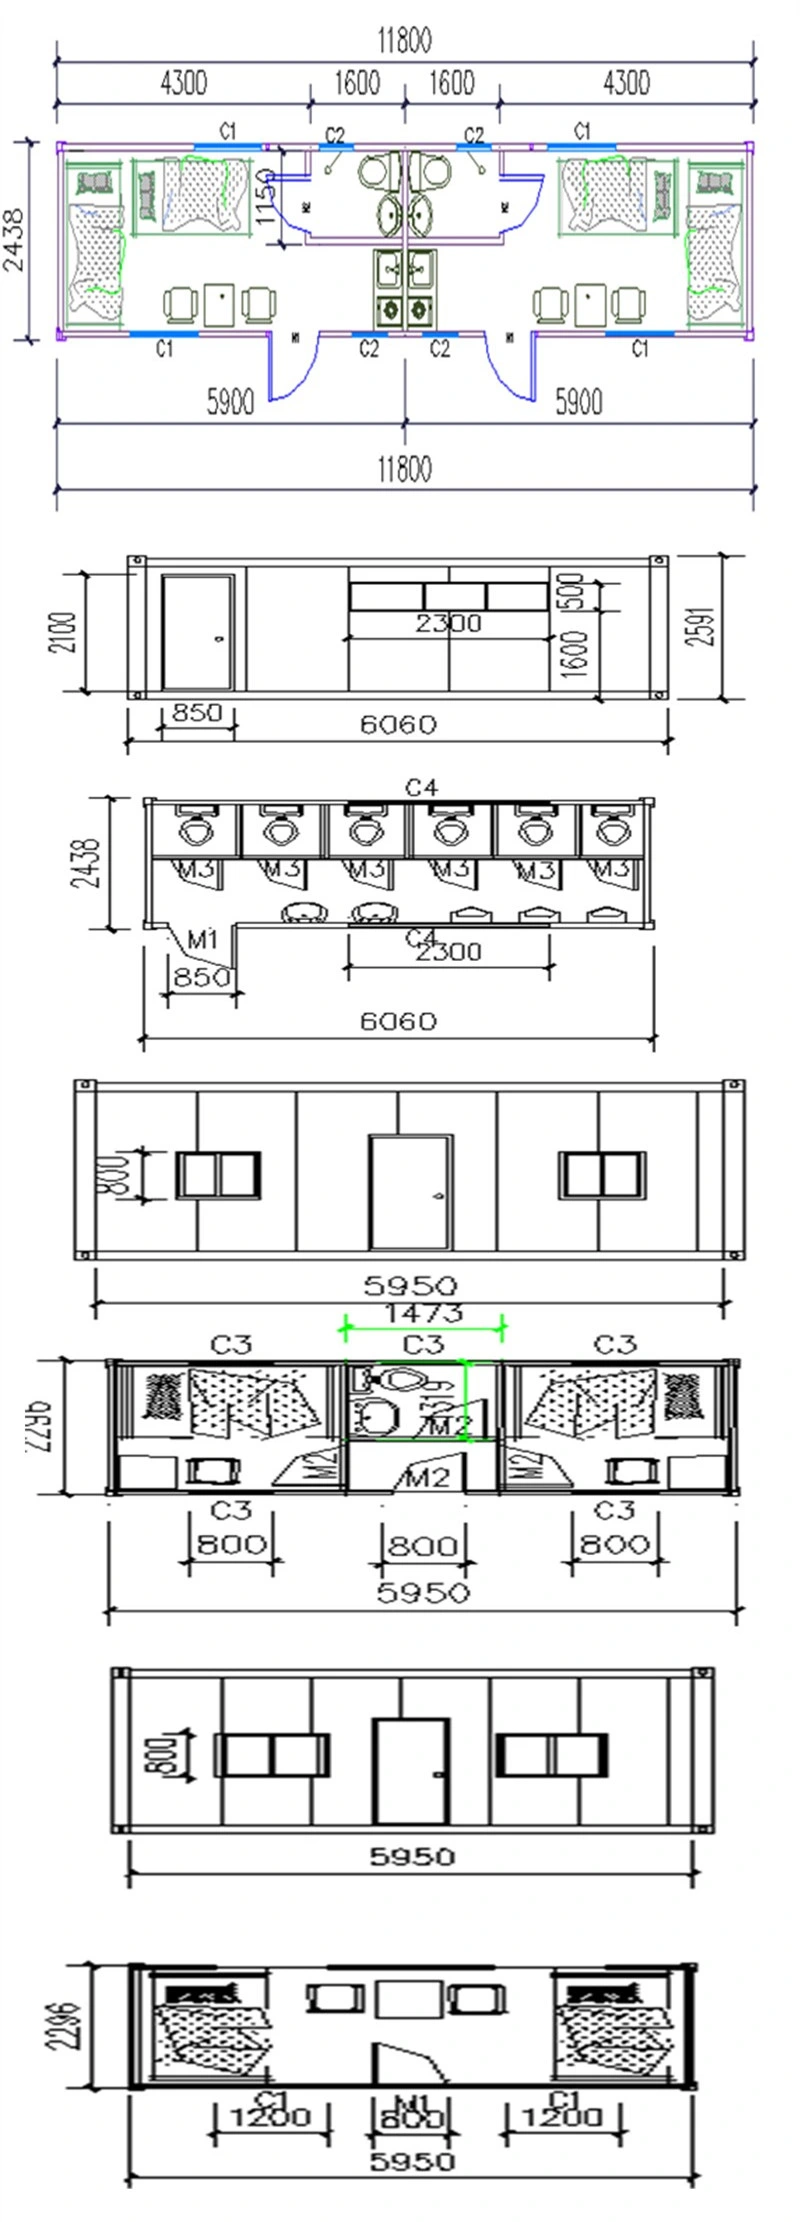 North America Duplex Loft Style Modular House Flat Pack Container Home Villa